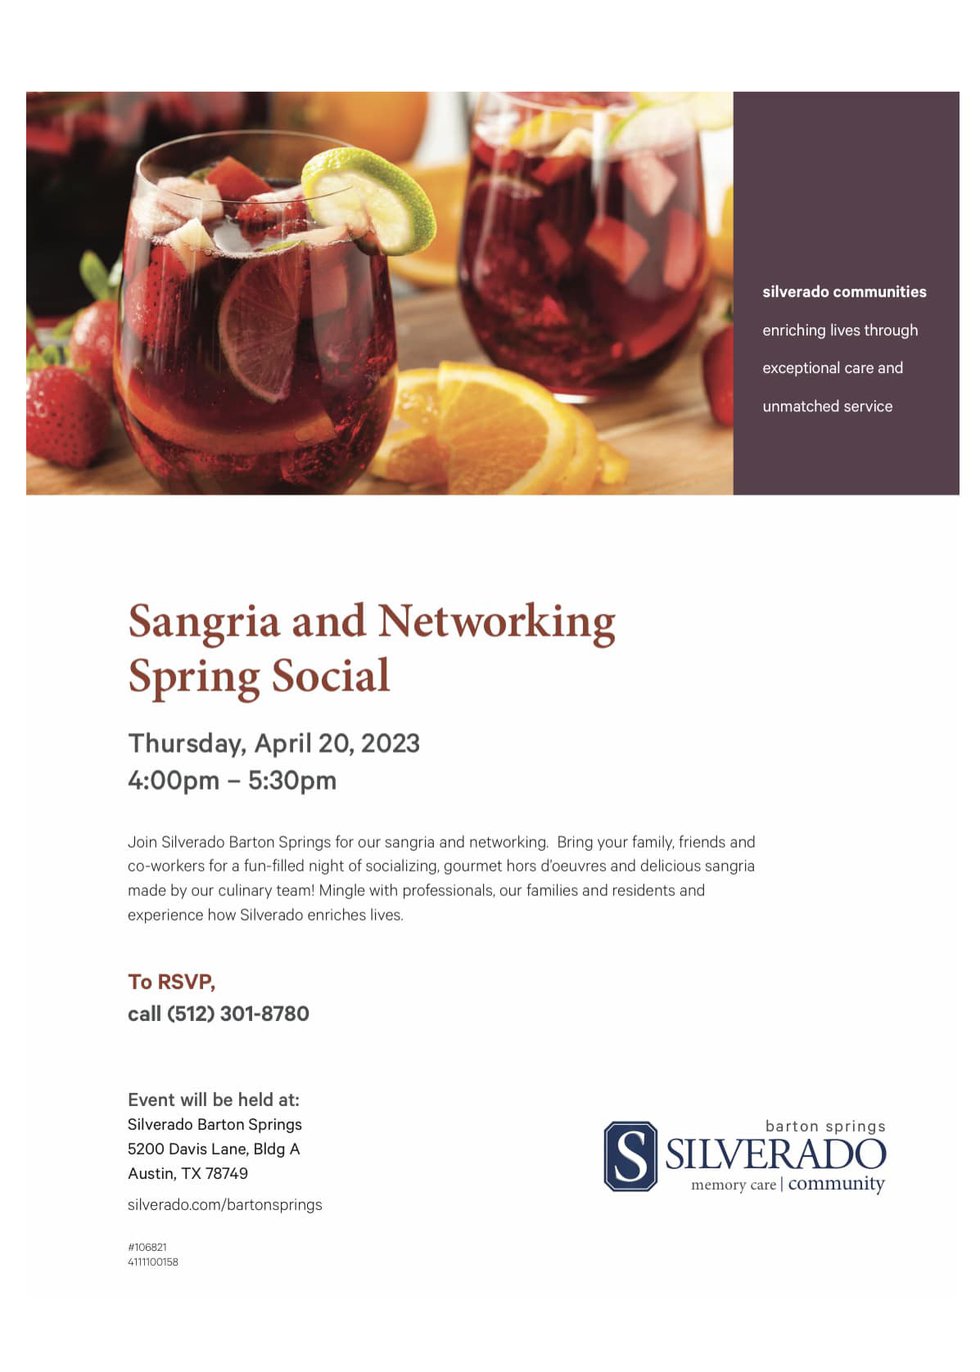 Silverado Barton Springs Sangria and Networking April 2023.jpg